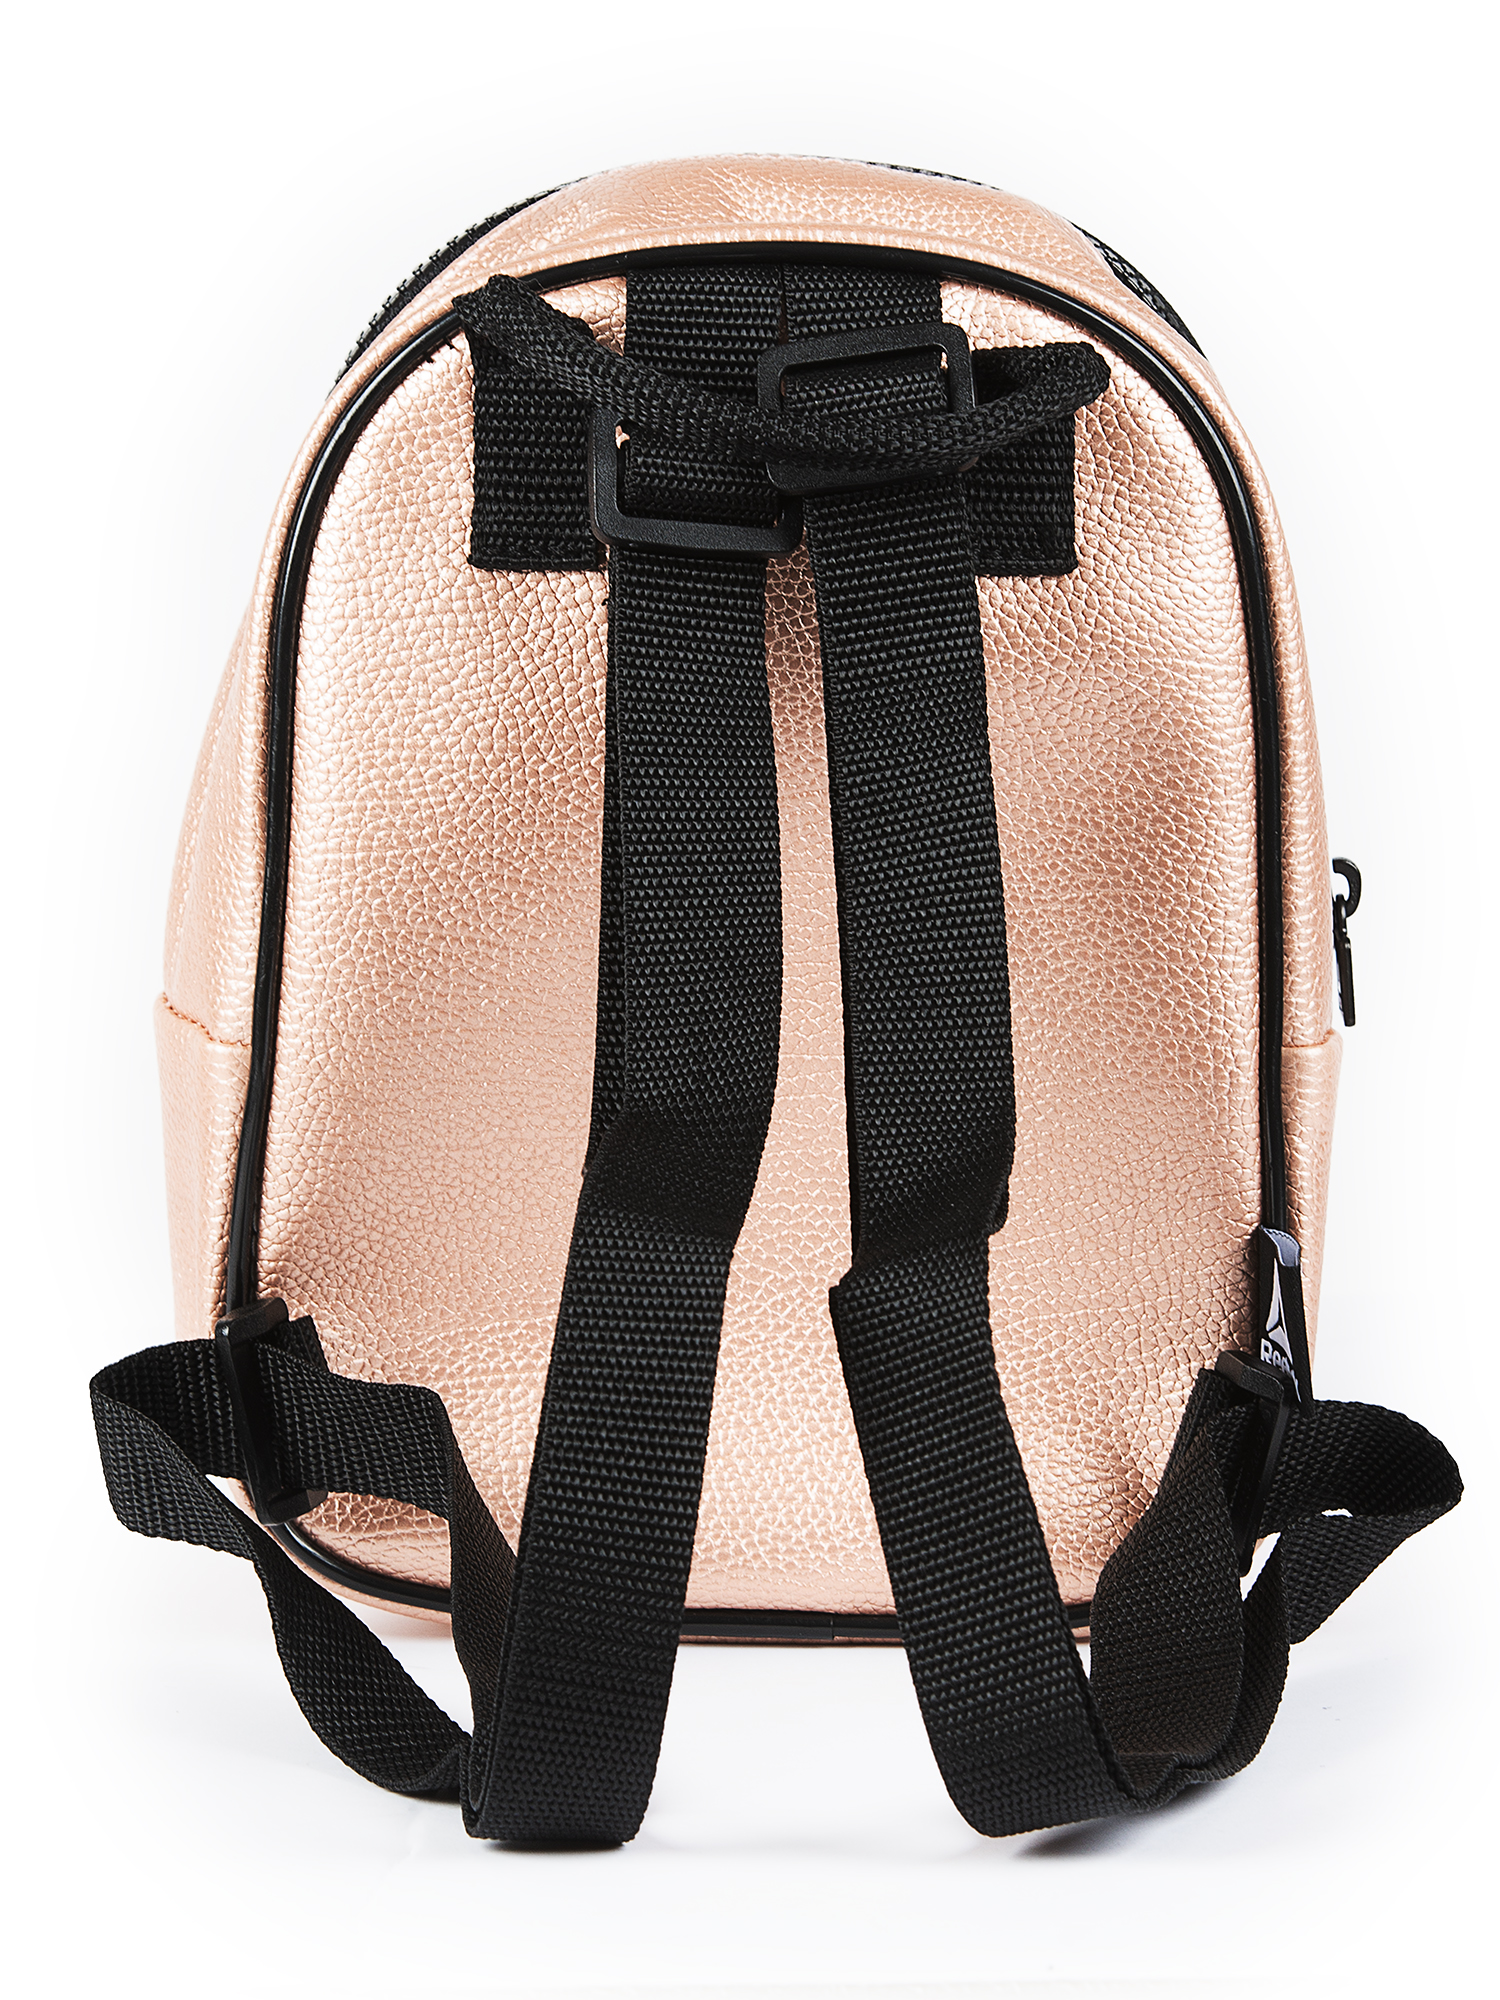 Reebok Classic Women's Mini Backpack Gold - image 3 of 4